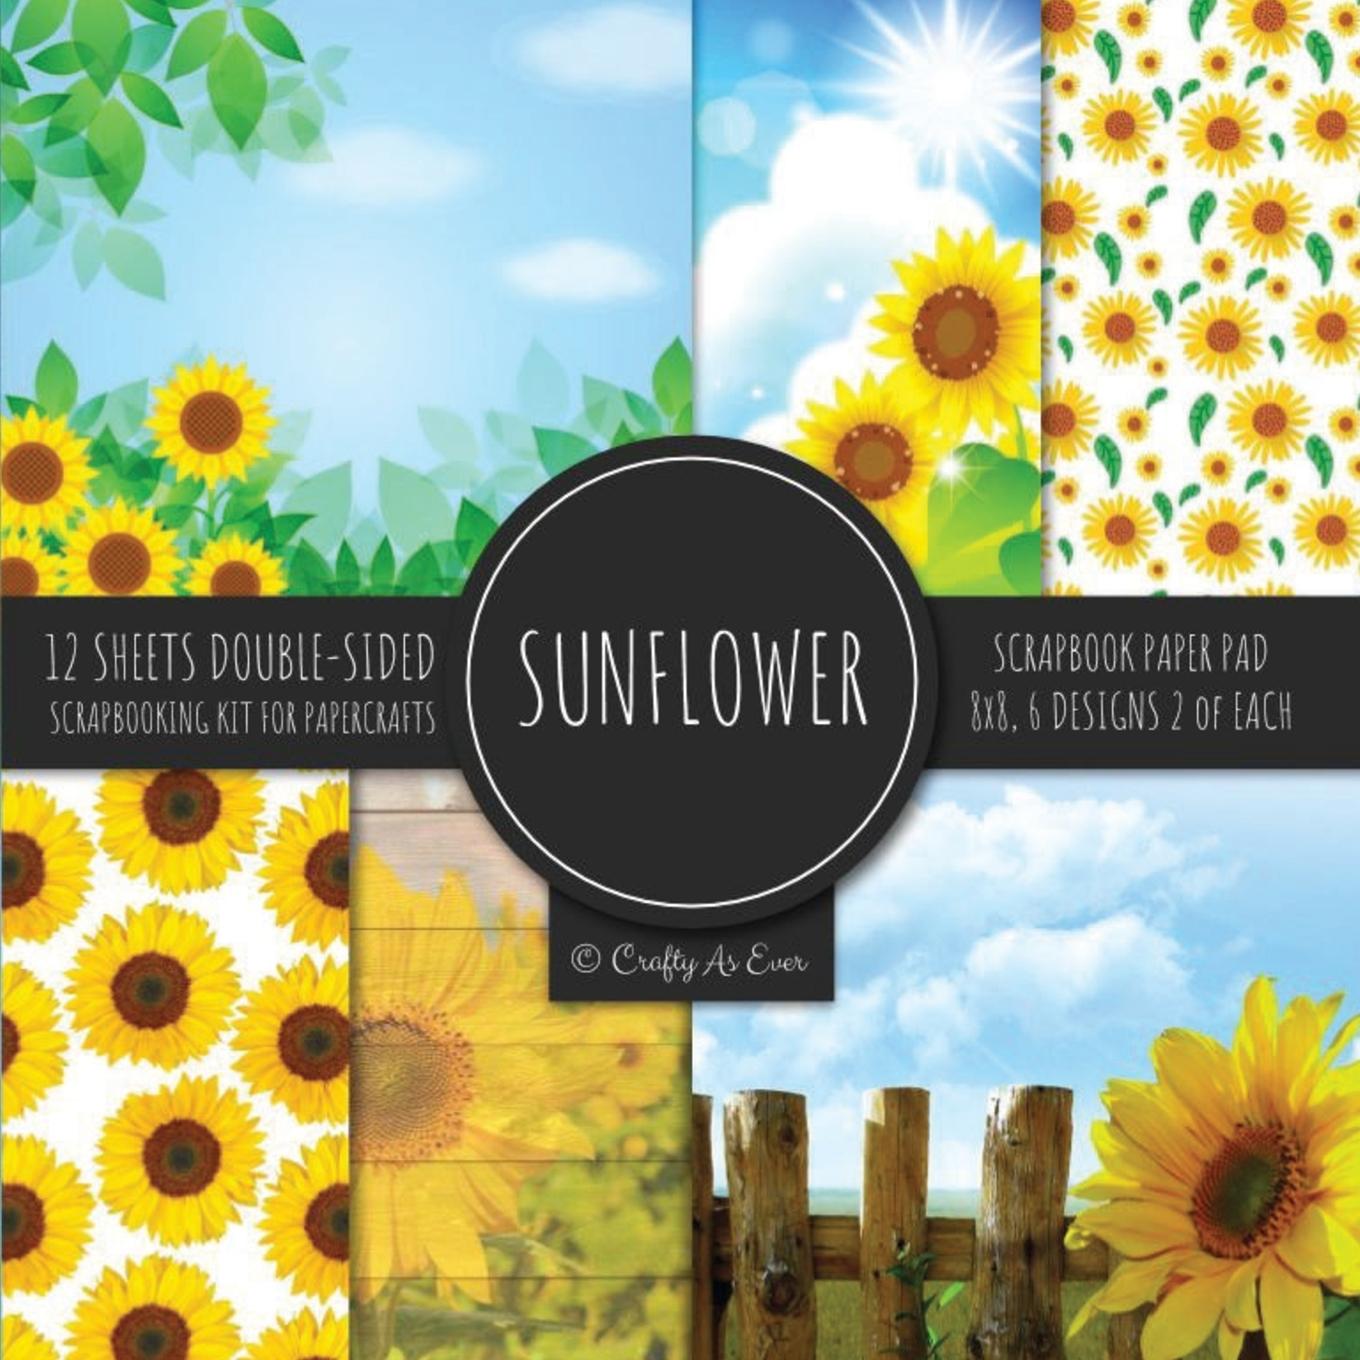 Книга Sunflower Scrapbook Paper Pad 8x8 Scrapbooking Kit for Papercrafts, Cardmaking, Printmaking, DIY Crafts, Botanical Themed, Designs, Borders, Backgroun Crafty as Ever